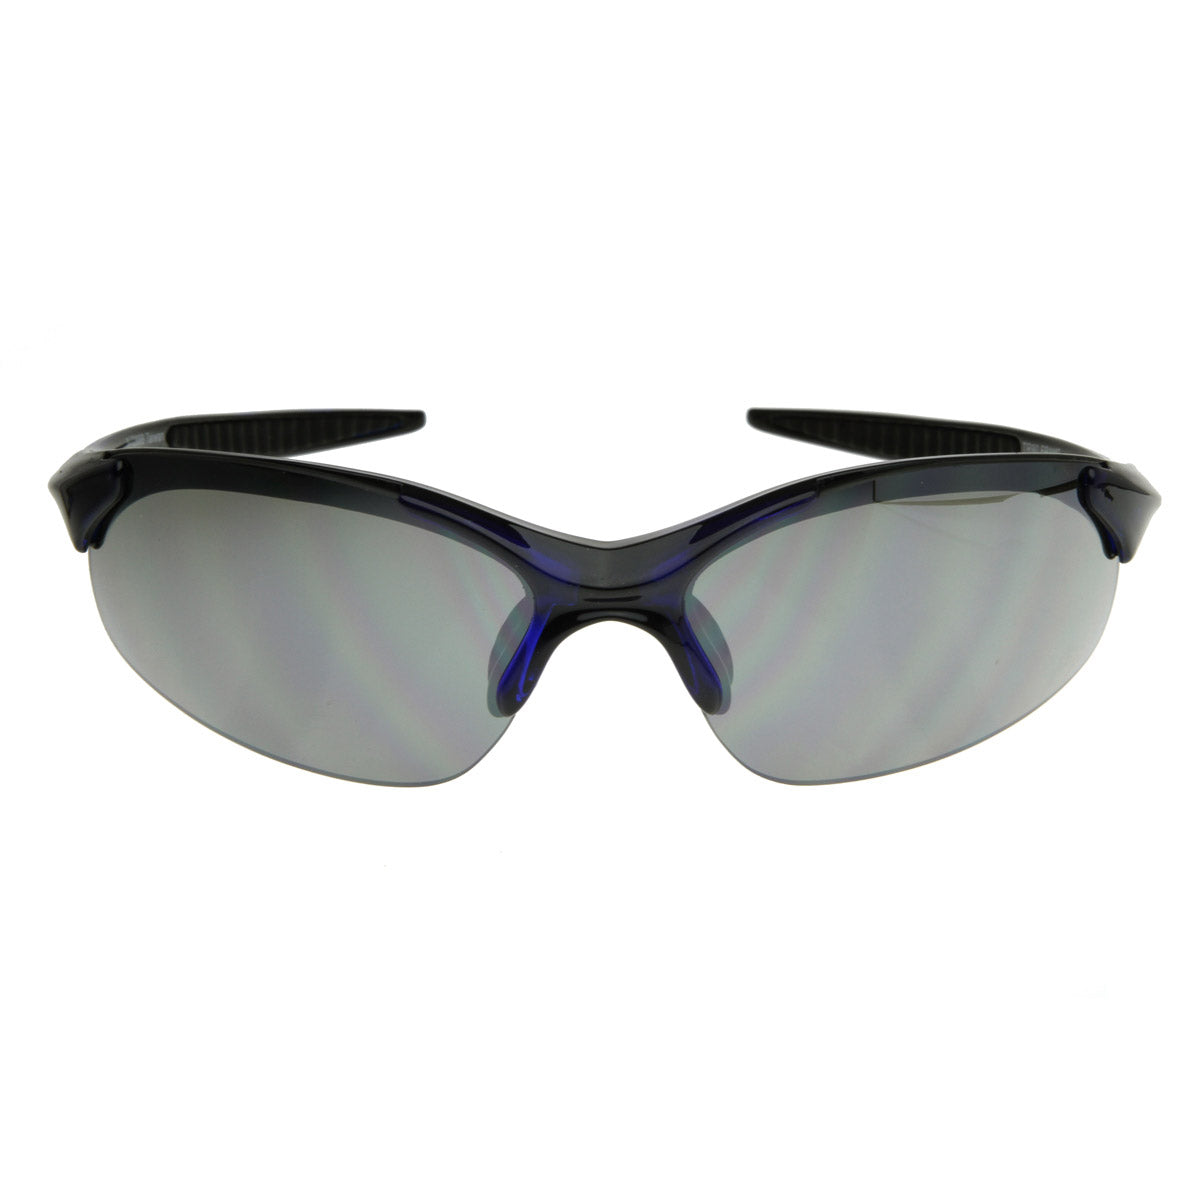 Shatterproof Half Frame TR90 Sports Sunglasses, Silver